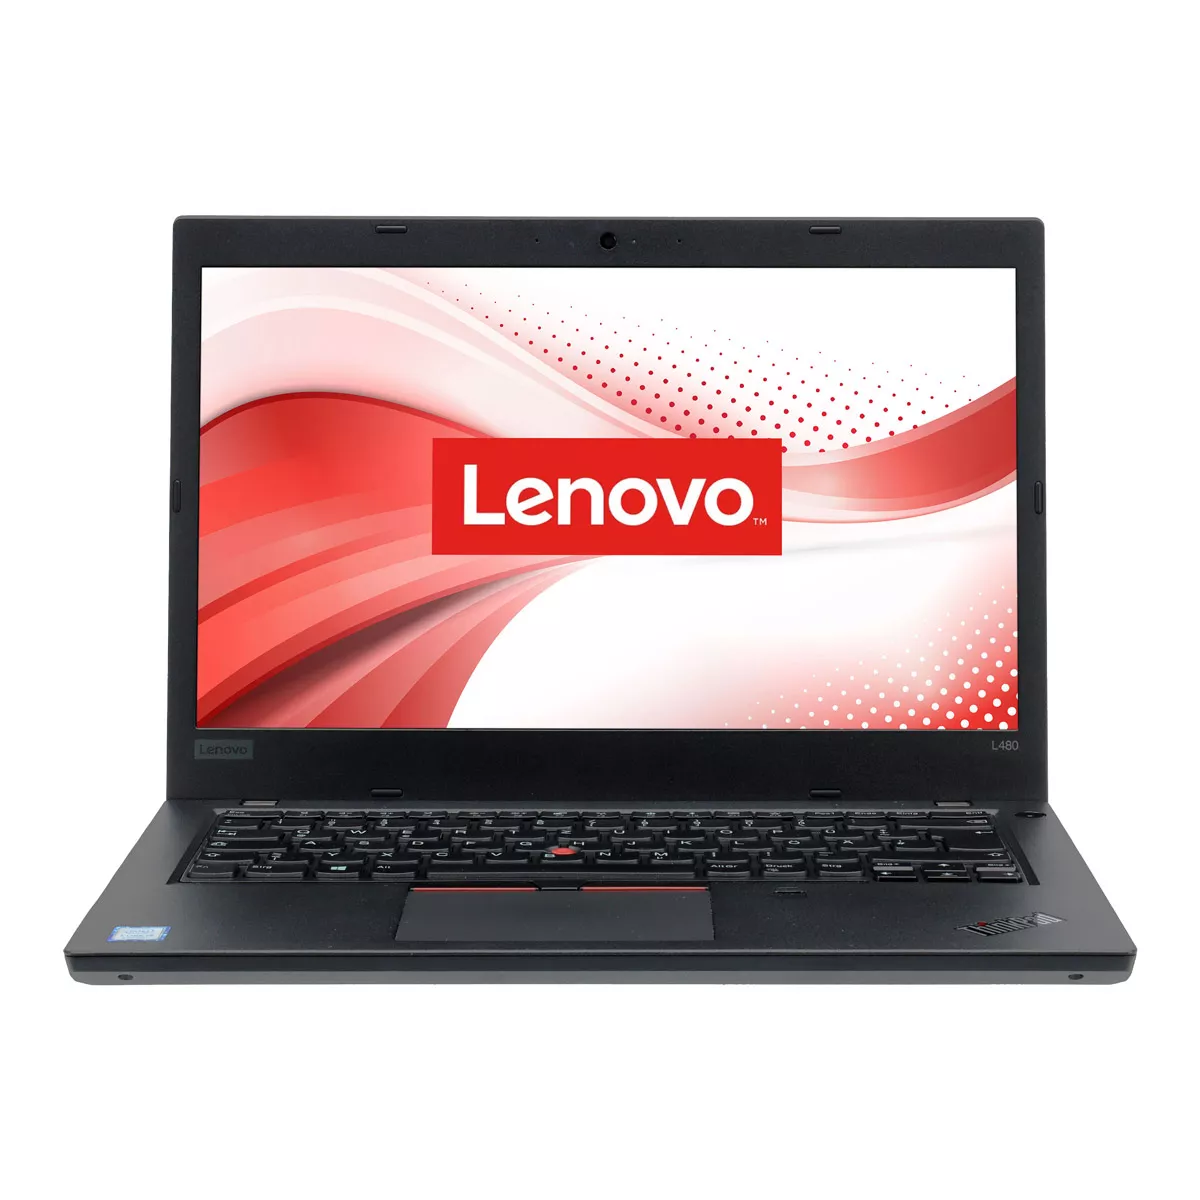 Lenovo ThinkPad L480 Core i5 8250U Full-HD 16 GB 500 GB nVME M.2 SSD Webcam A+